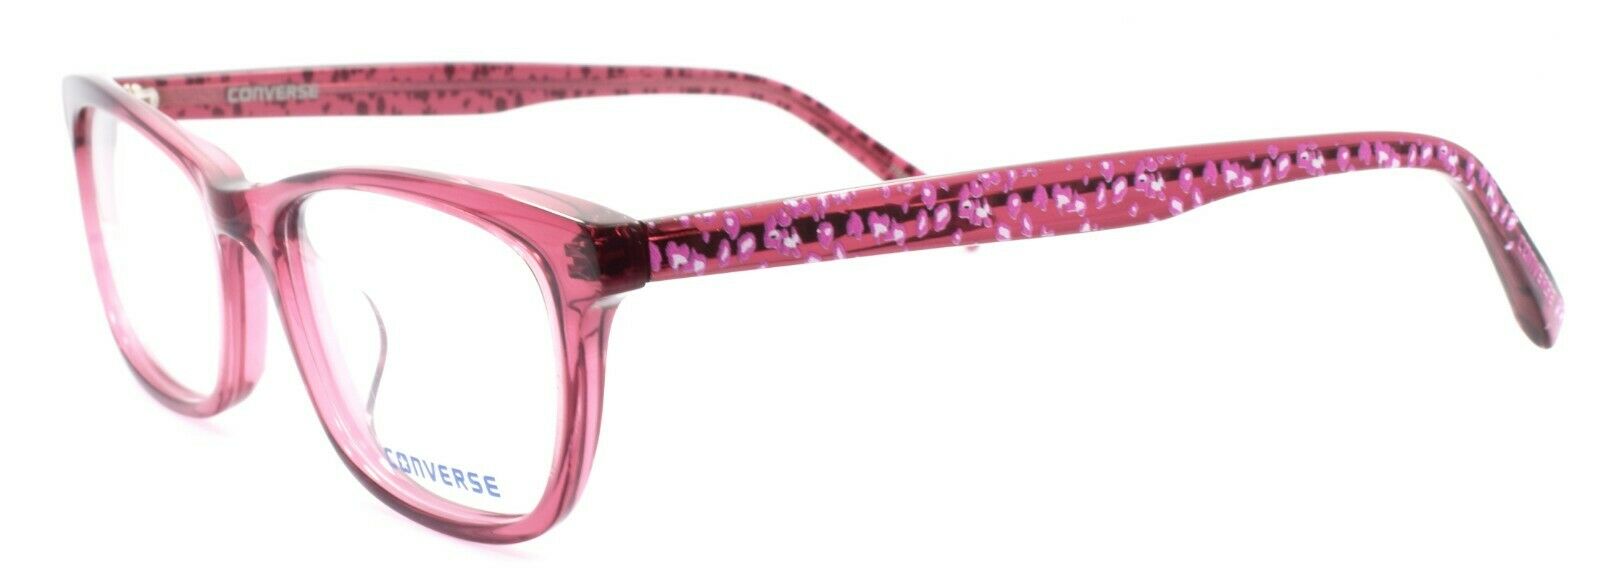 1-CONVERSE Q400 Women's Eyeglasses Frames 52-17-145 Purple + CASE-751286294217-IKSpecs